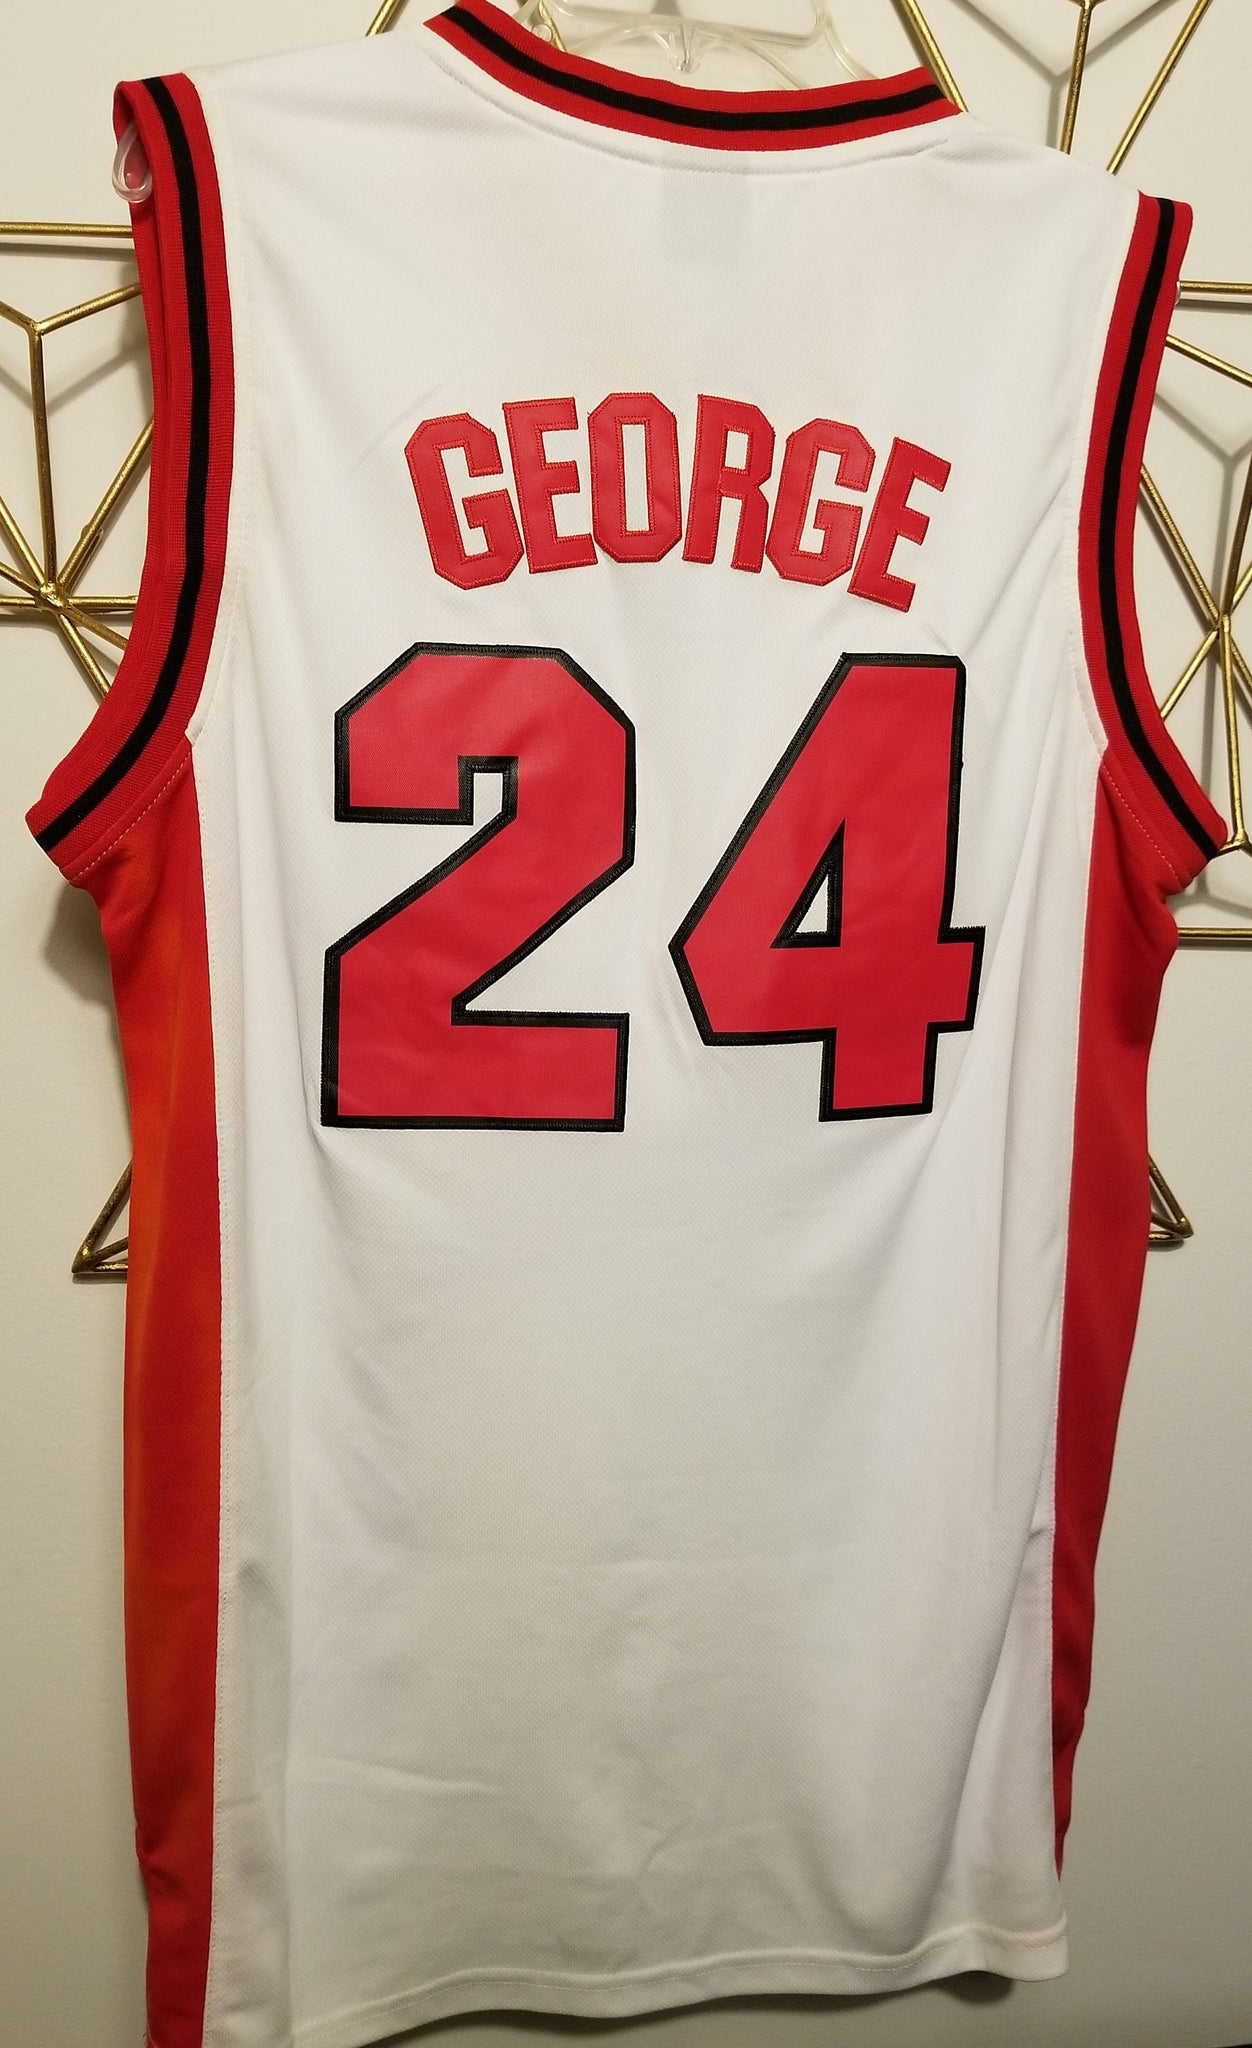 JordansSecretStuff Paul George Bulldogs High School Basketball Jersey Pg13 Throwback Retro Jersey M / Red